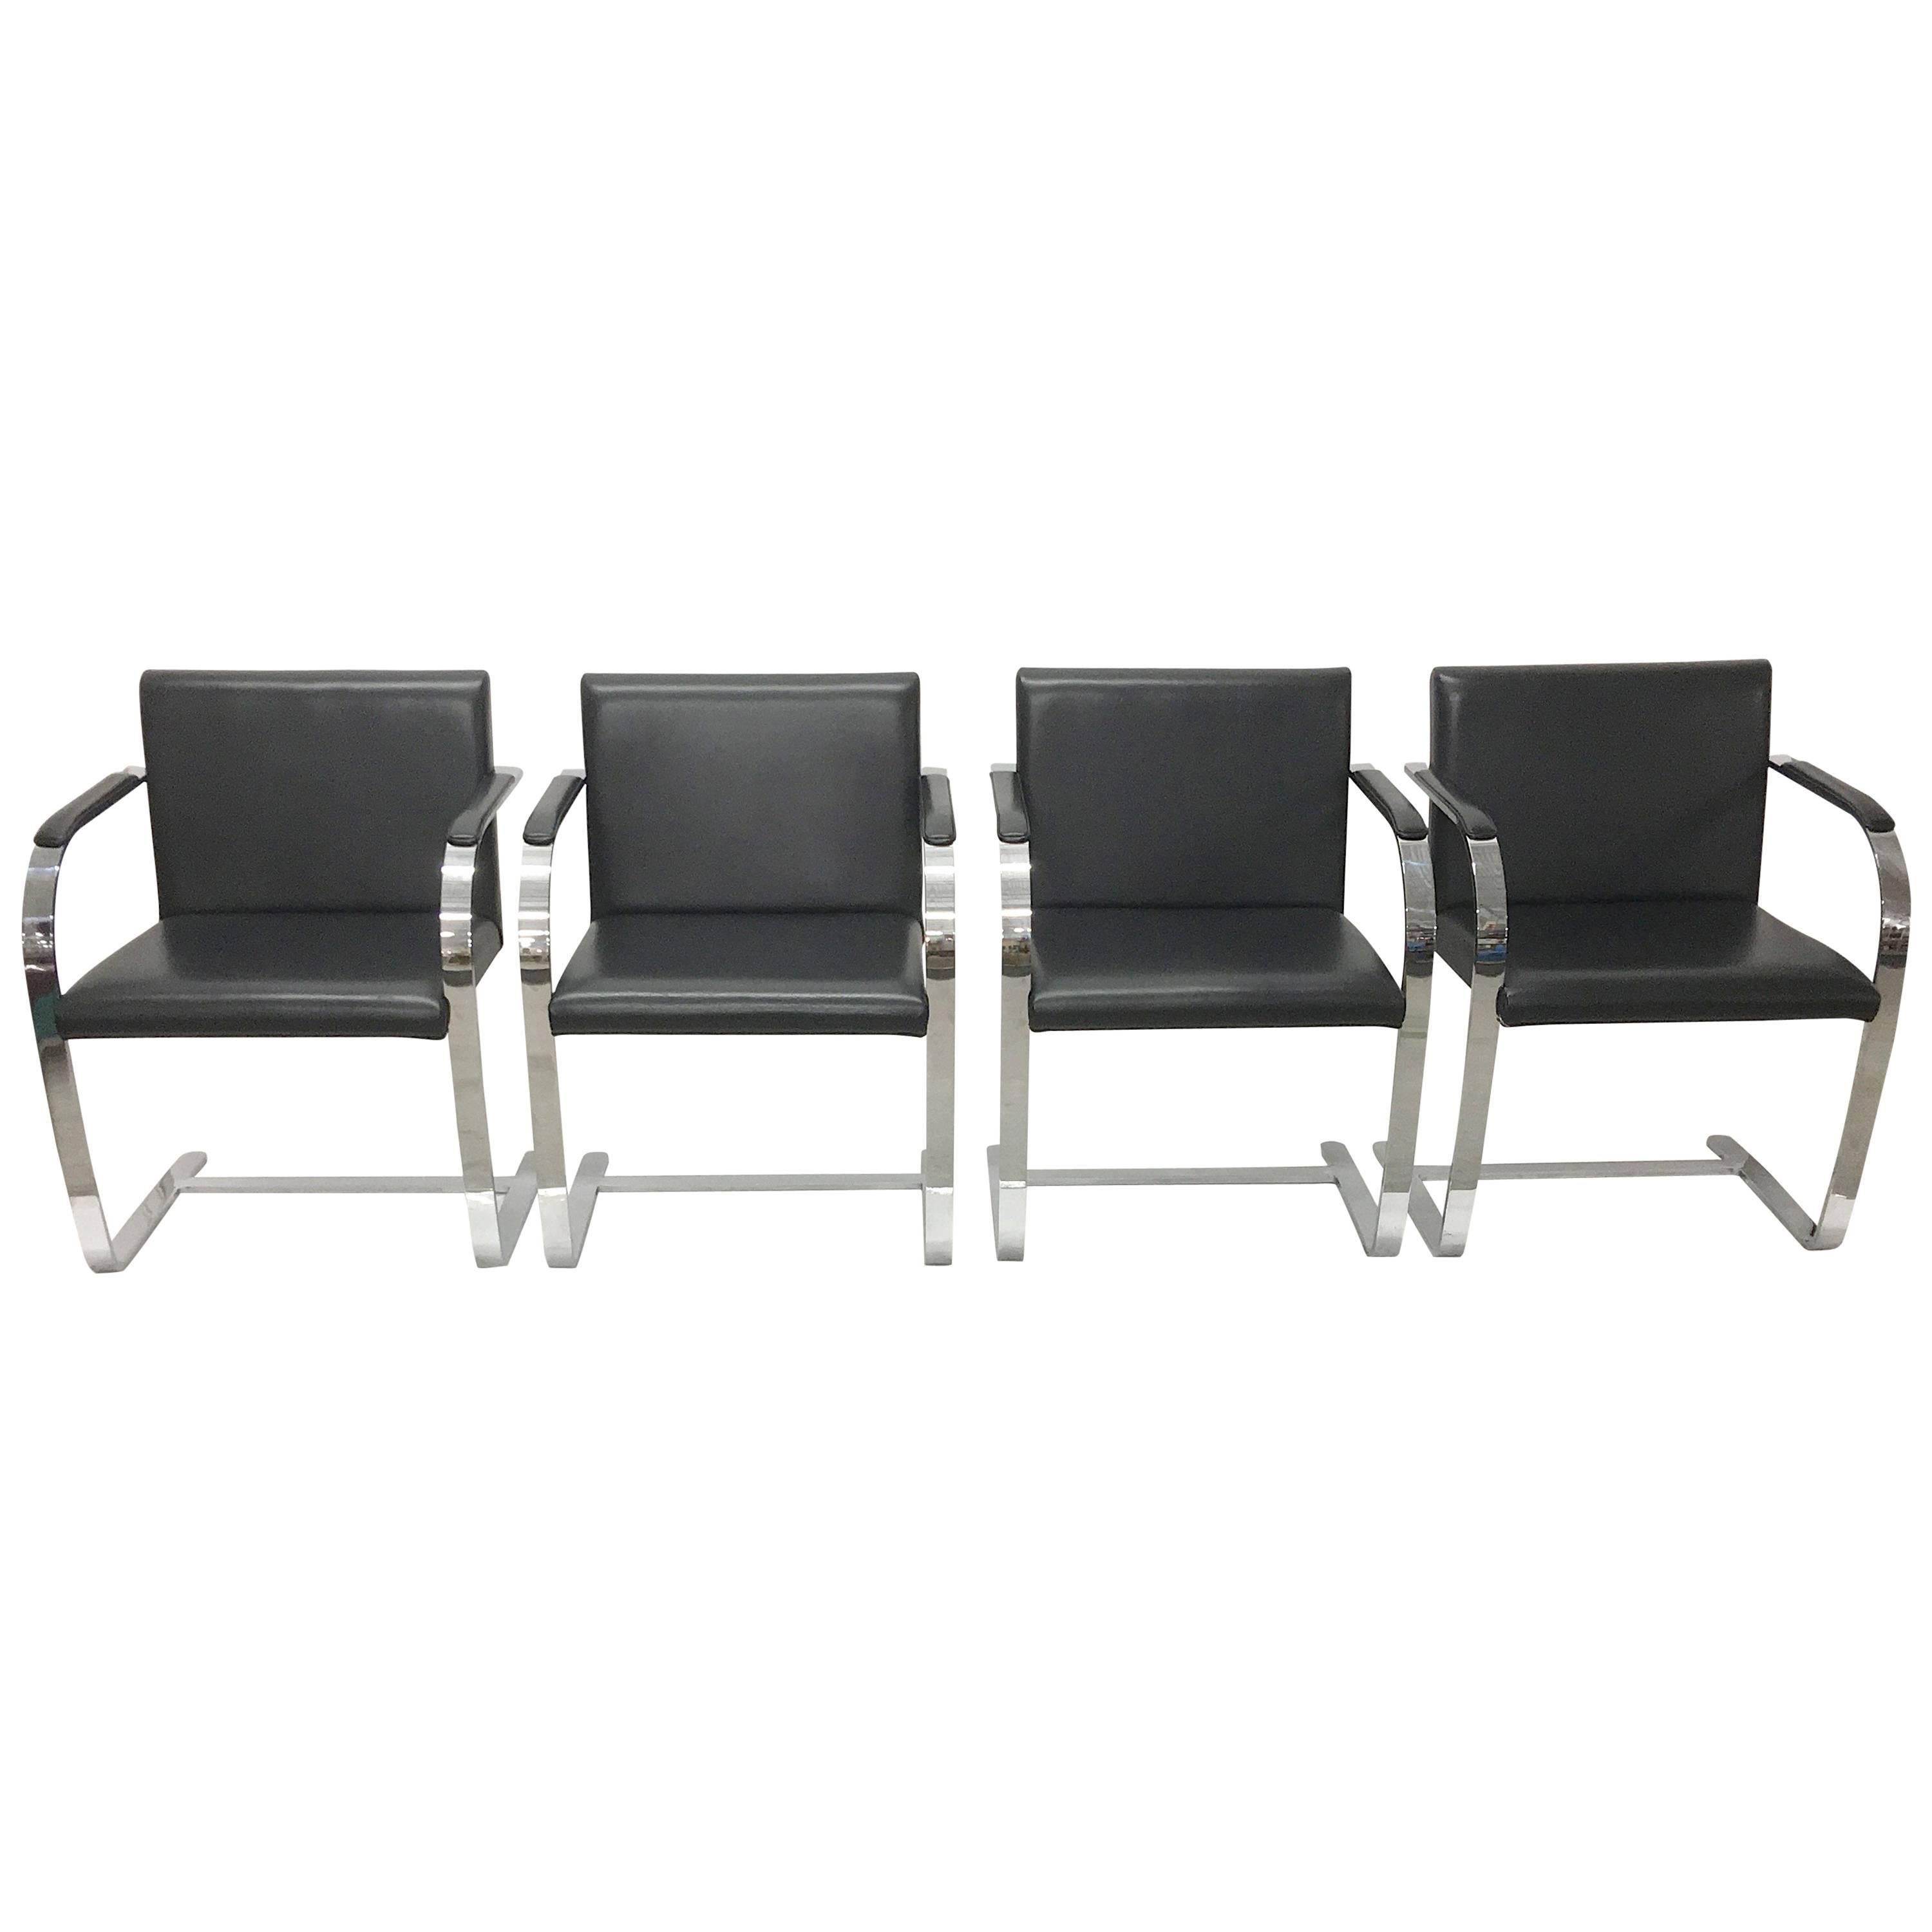 Set Four Mies Van Der Rohe for Knoll Brno Chairs Black Leather Flat Bar Chrome